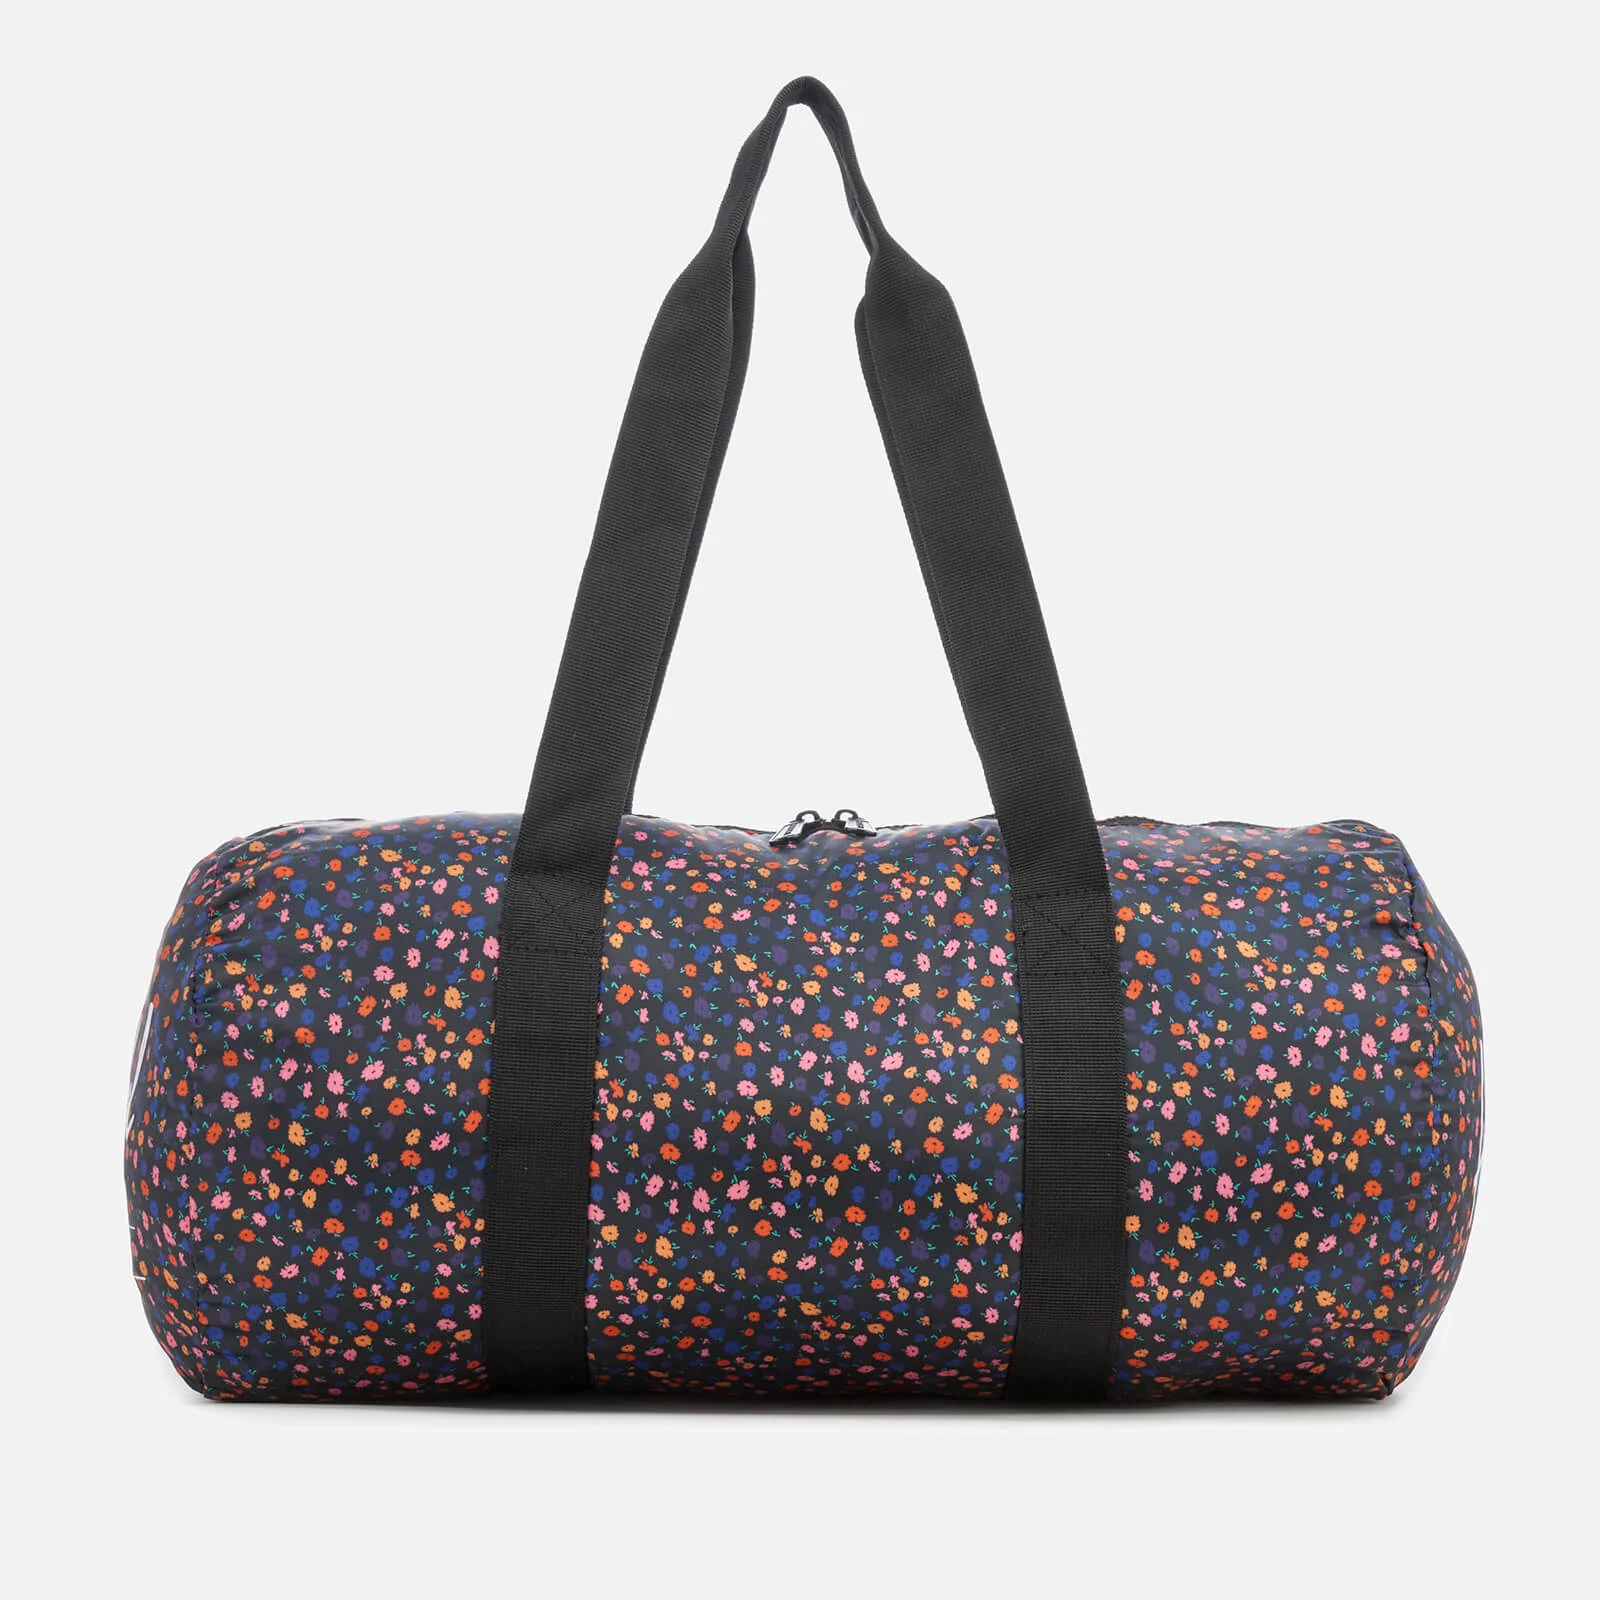 Herschel Supply Co. Women's Packable Duffle Bag - Black Mini Floral Image 1